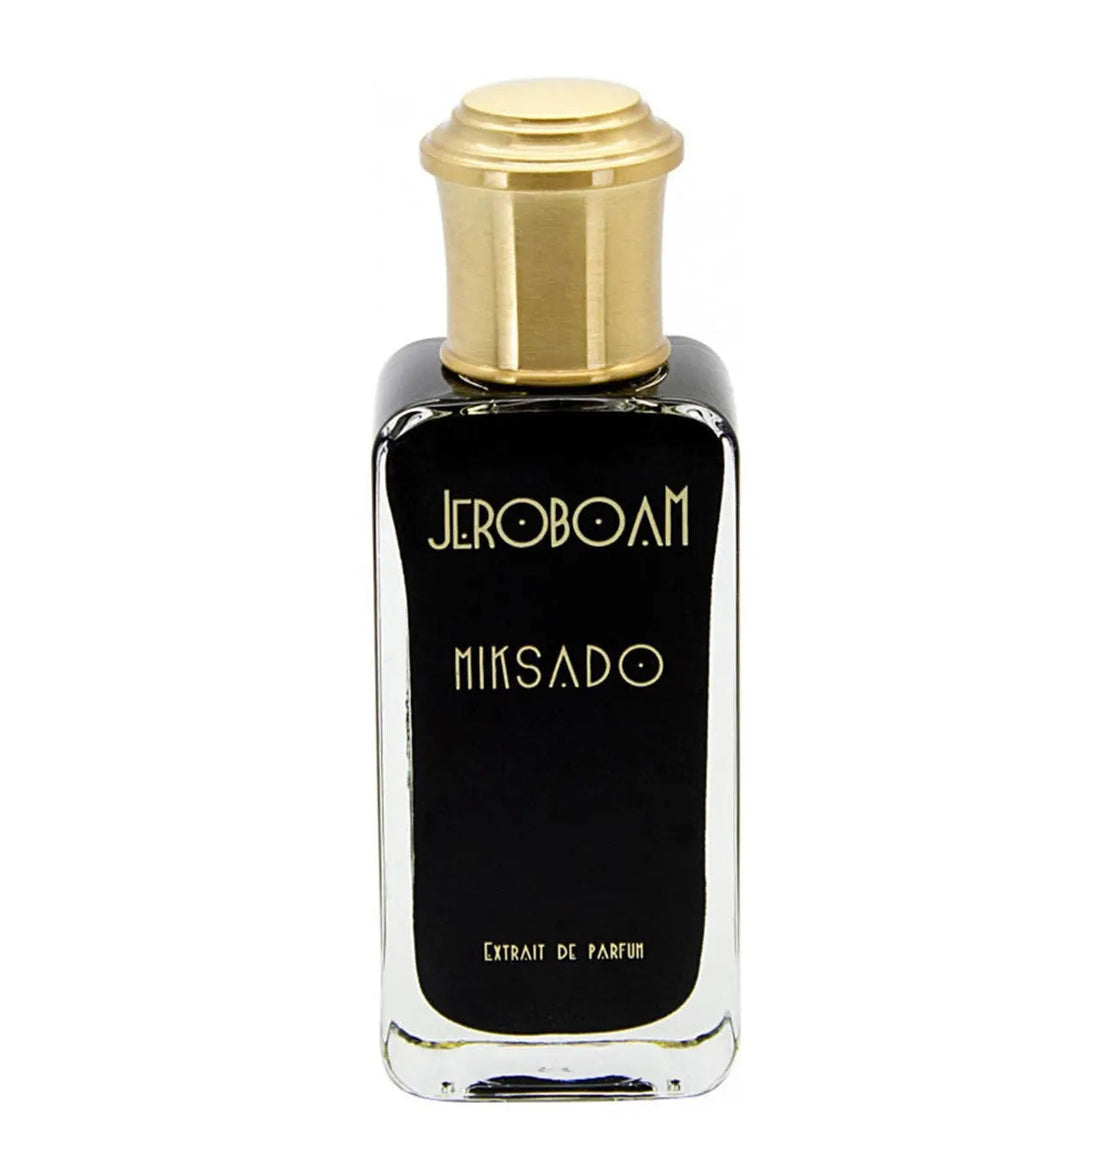 Jeroboam MIKSADO Perfume Extract - 30 ml